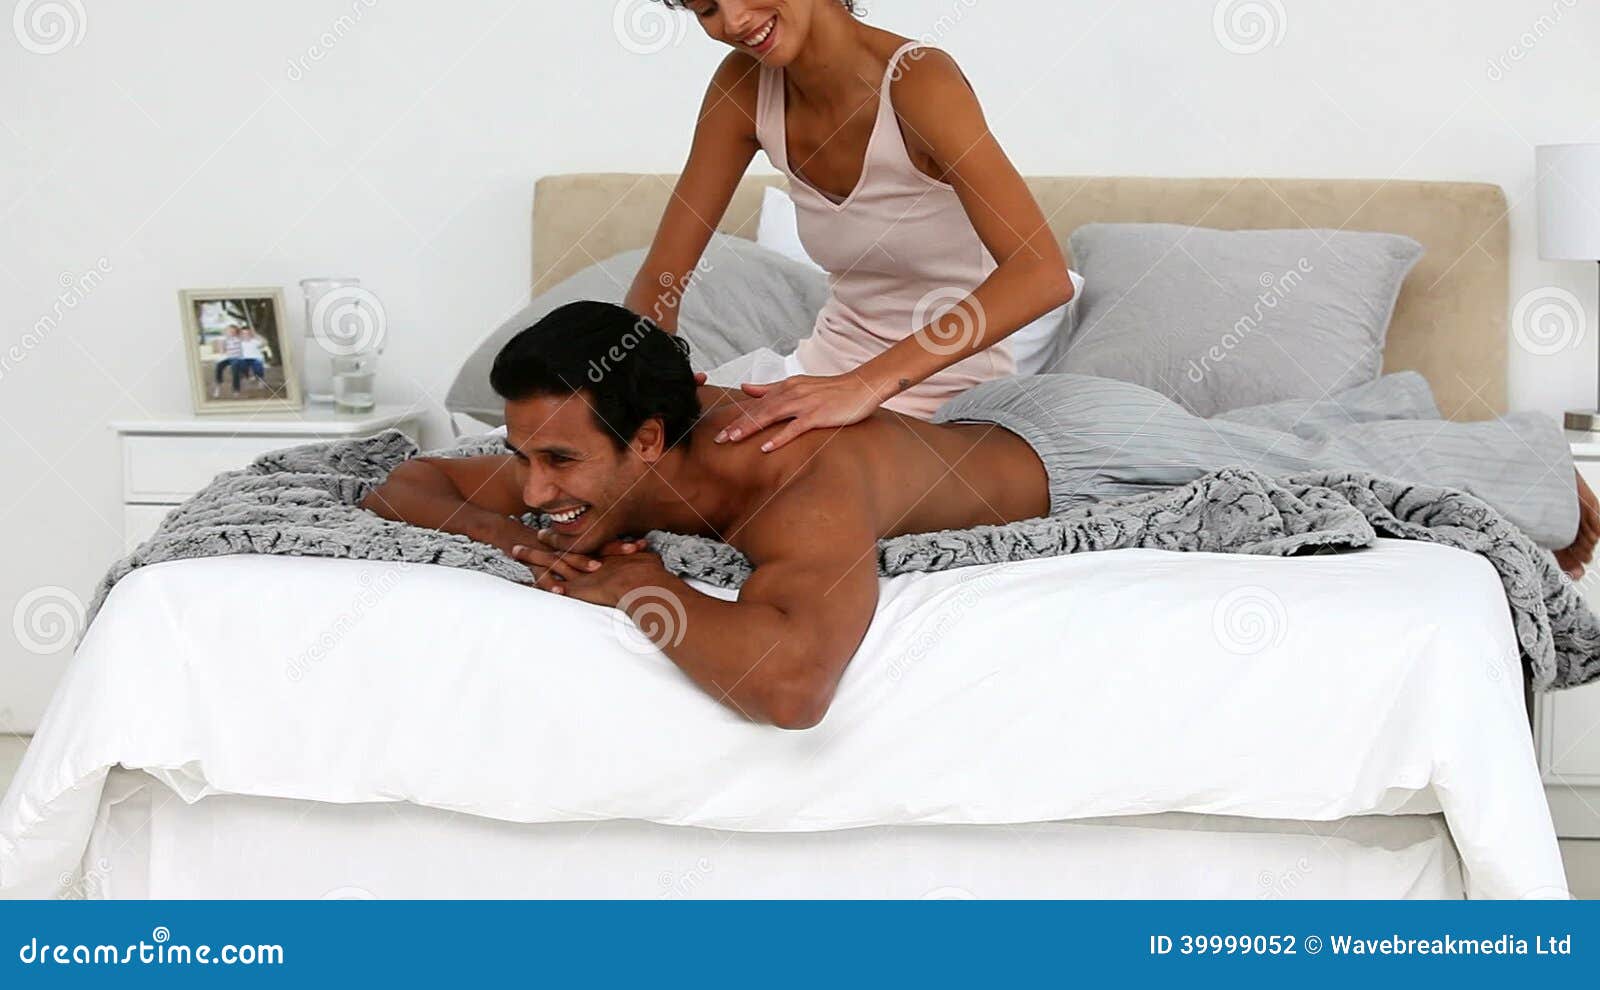 Жена принесла мужу видео. Мужчина массажирует женщину фото на кровати.